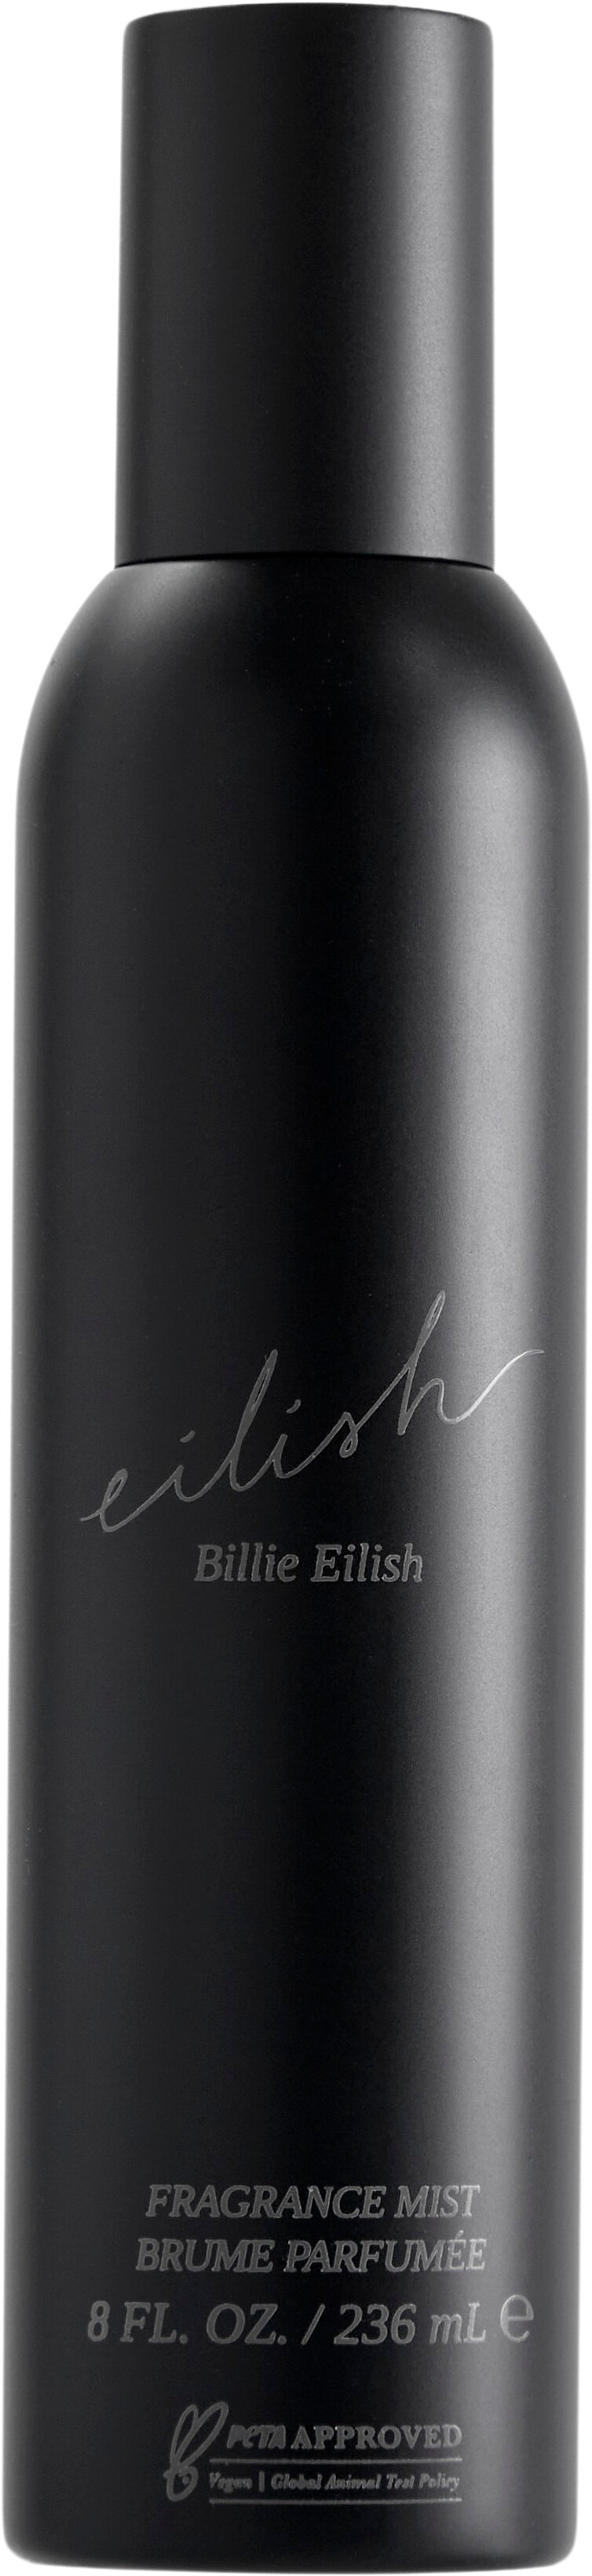 Billie Eilish Eilish Fragrance Mist 236ml